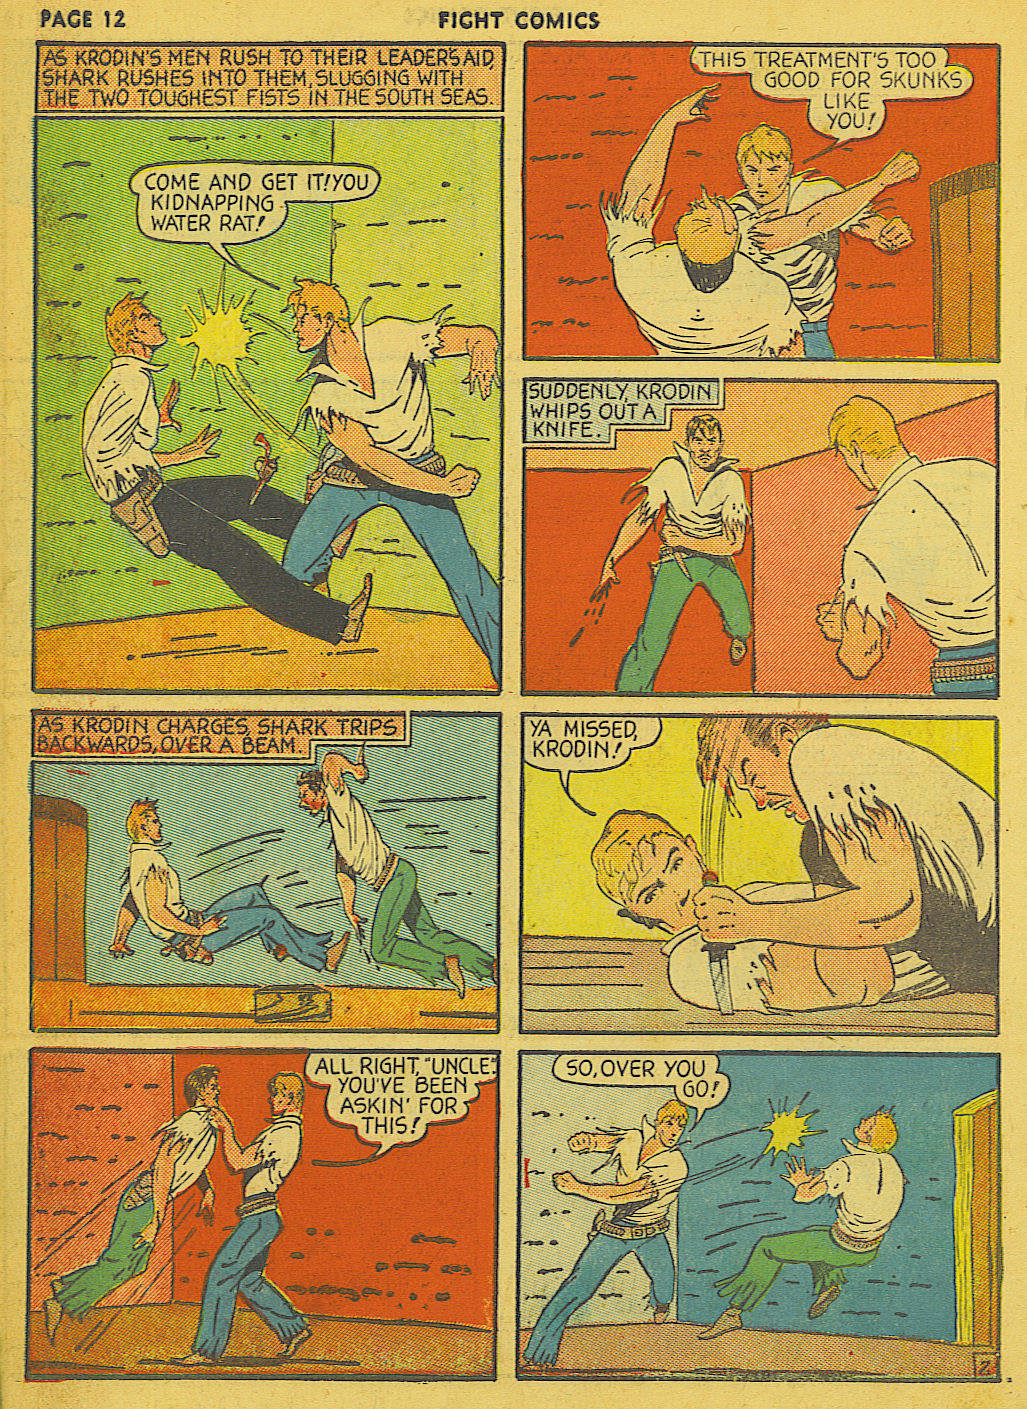 Read online Fight Comics comic -  Issue #6 - 14